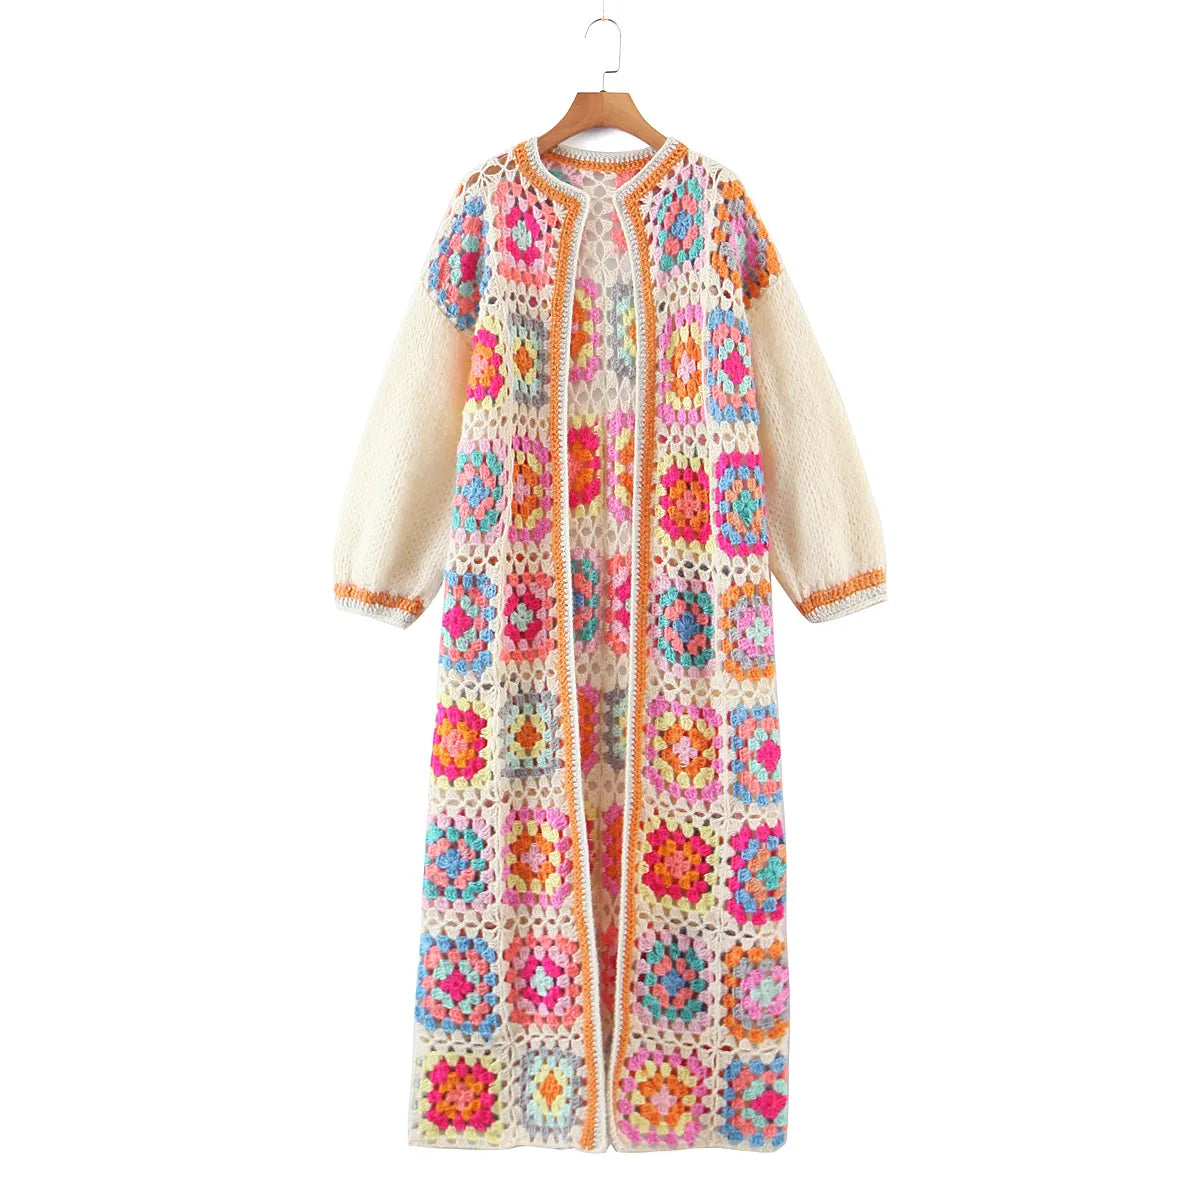 Bohemia Vintage Colored Plaid Flower Granny Square Hand Crochet Hooded Long Cardigan Coats & Jackets jehouze One Size Beige 